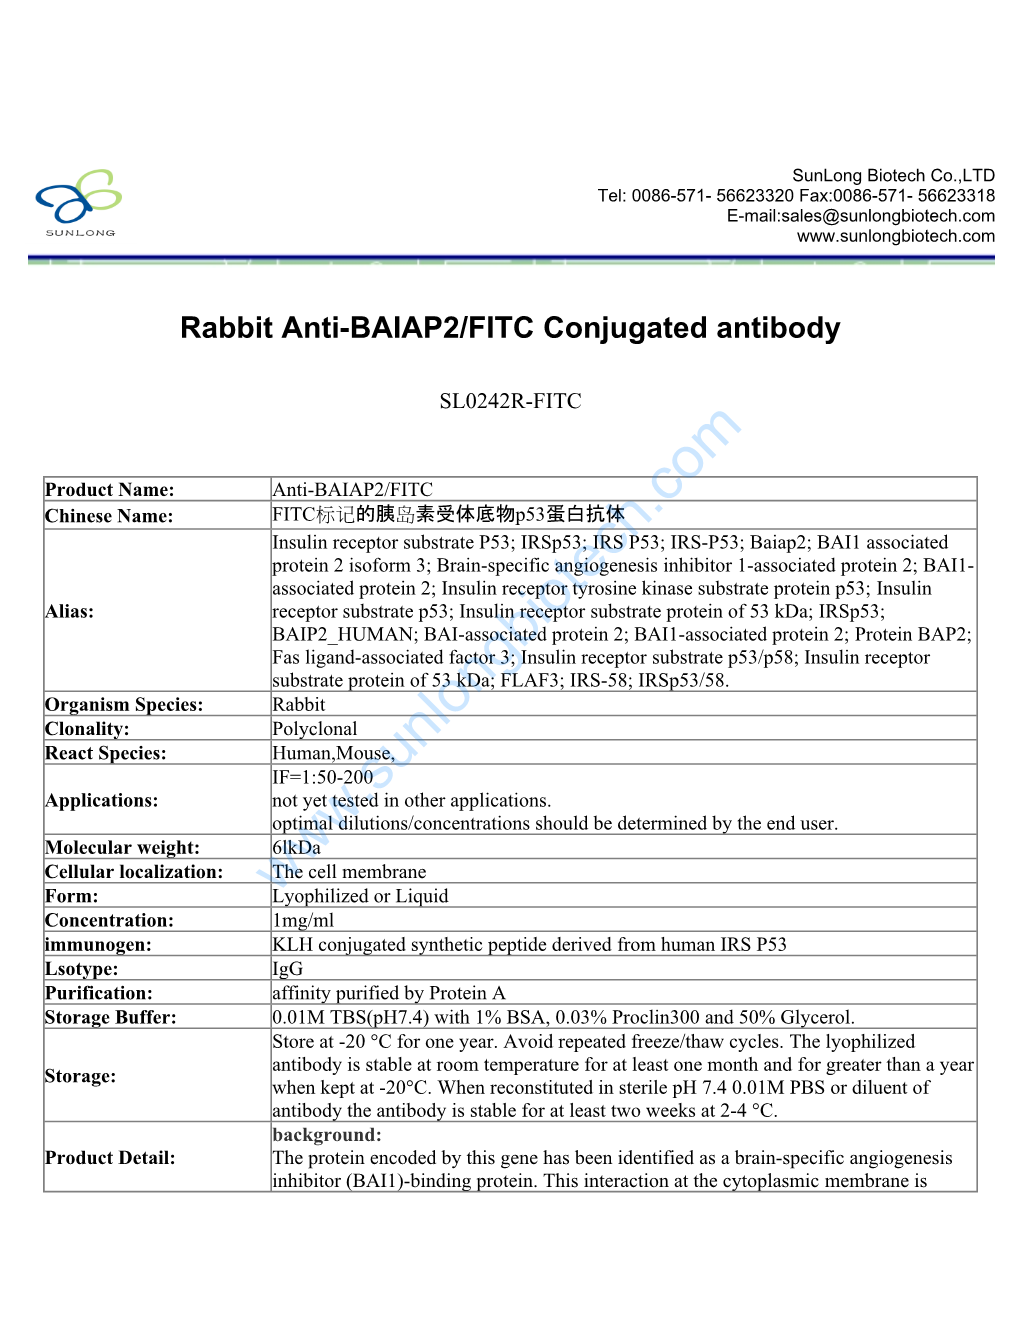 Rabbit Anti-BAIAP2/FITC Conjugated Antibody-SL0242R-FITC